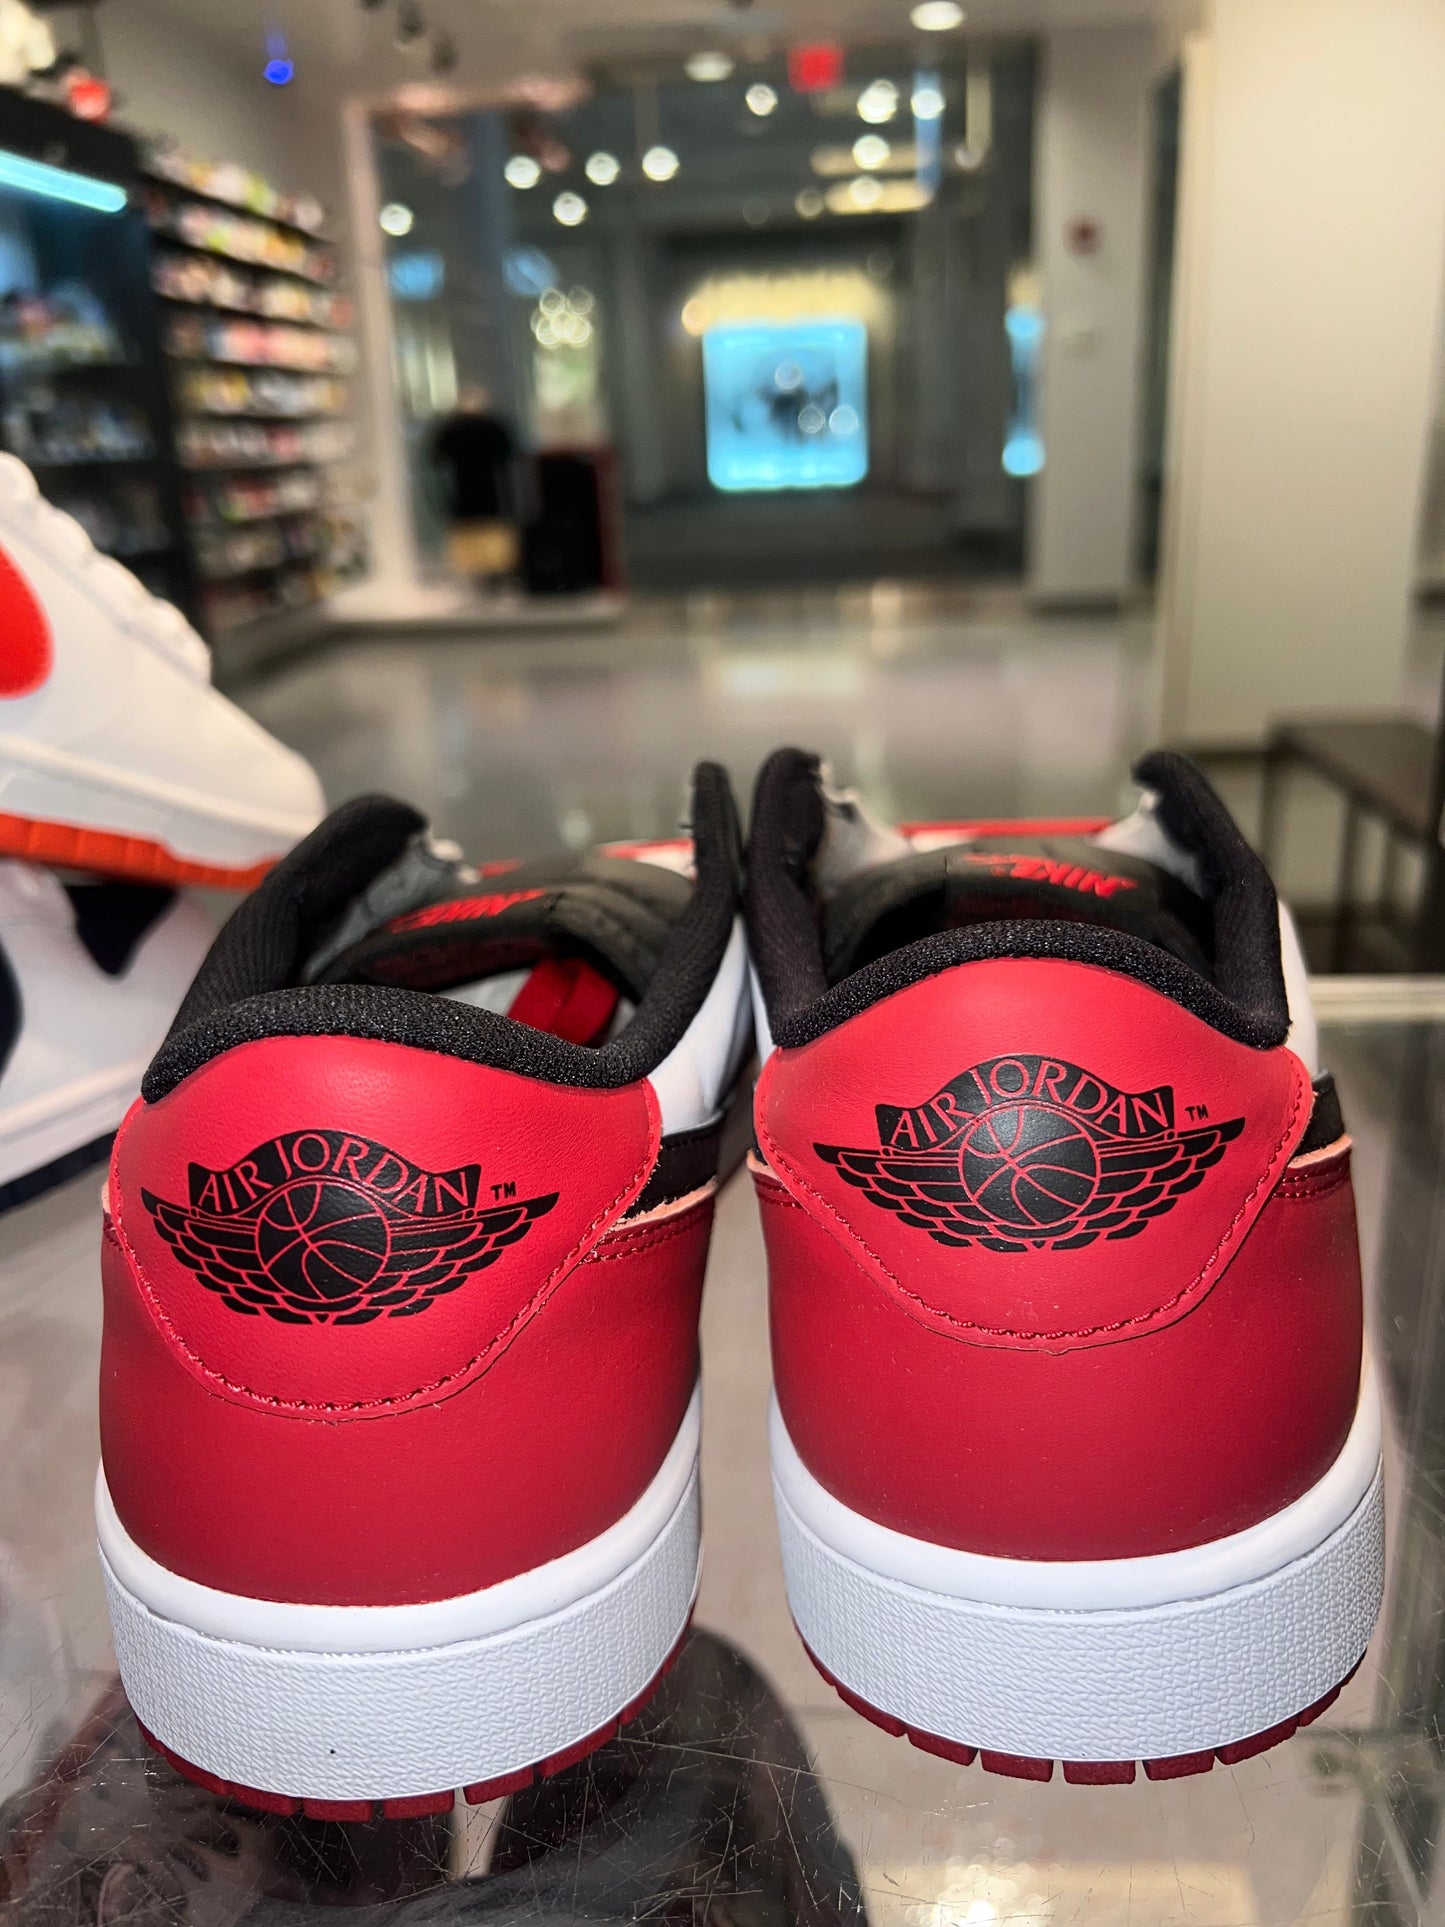 Size 10 Air Jordan 1 Low “Black Toe” Brand New (Mall)